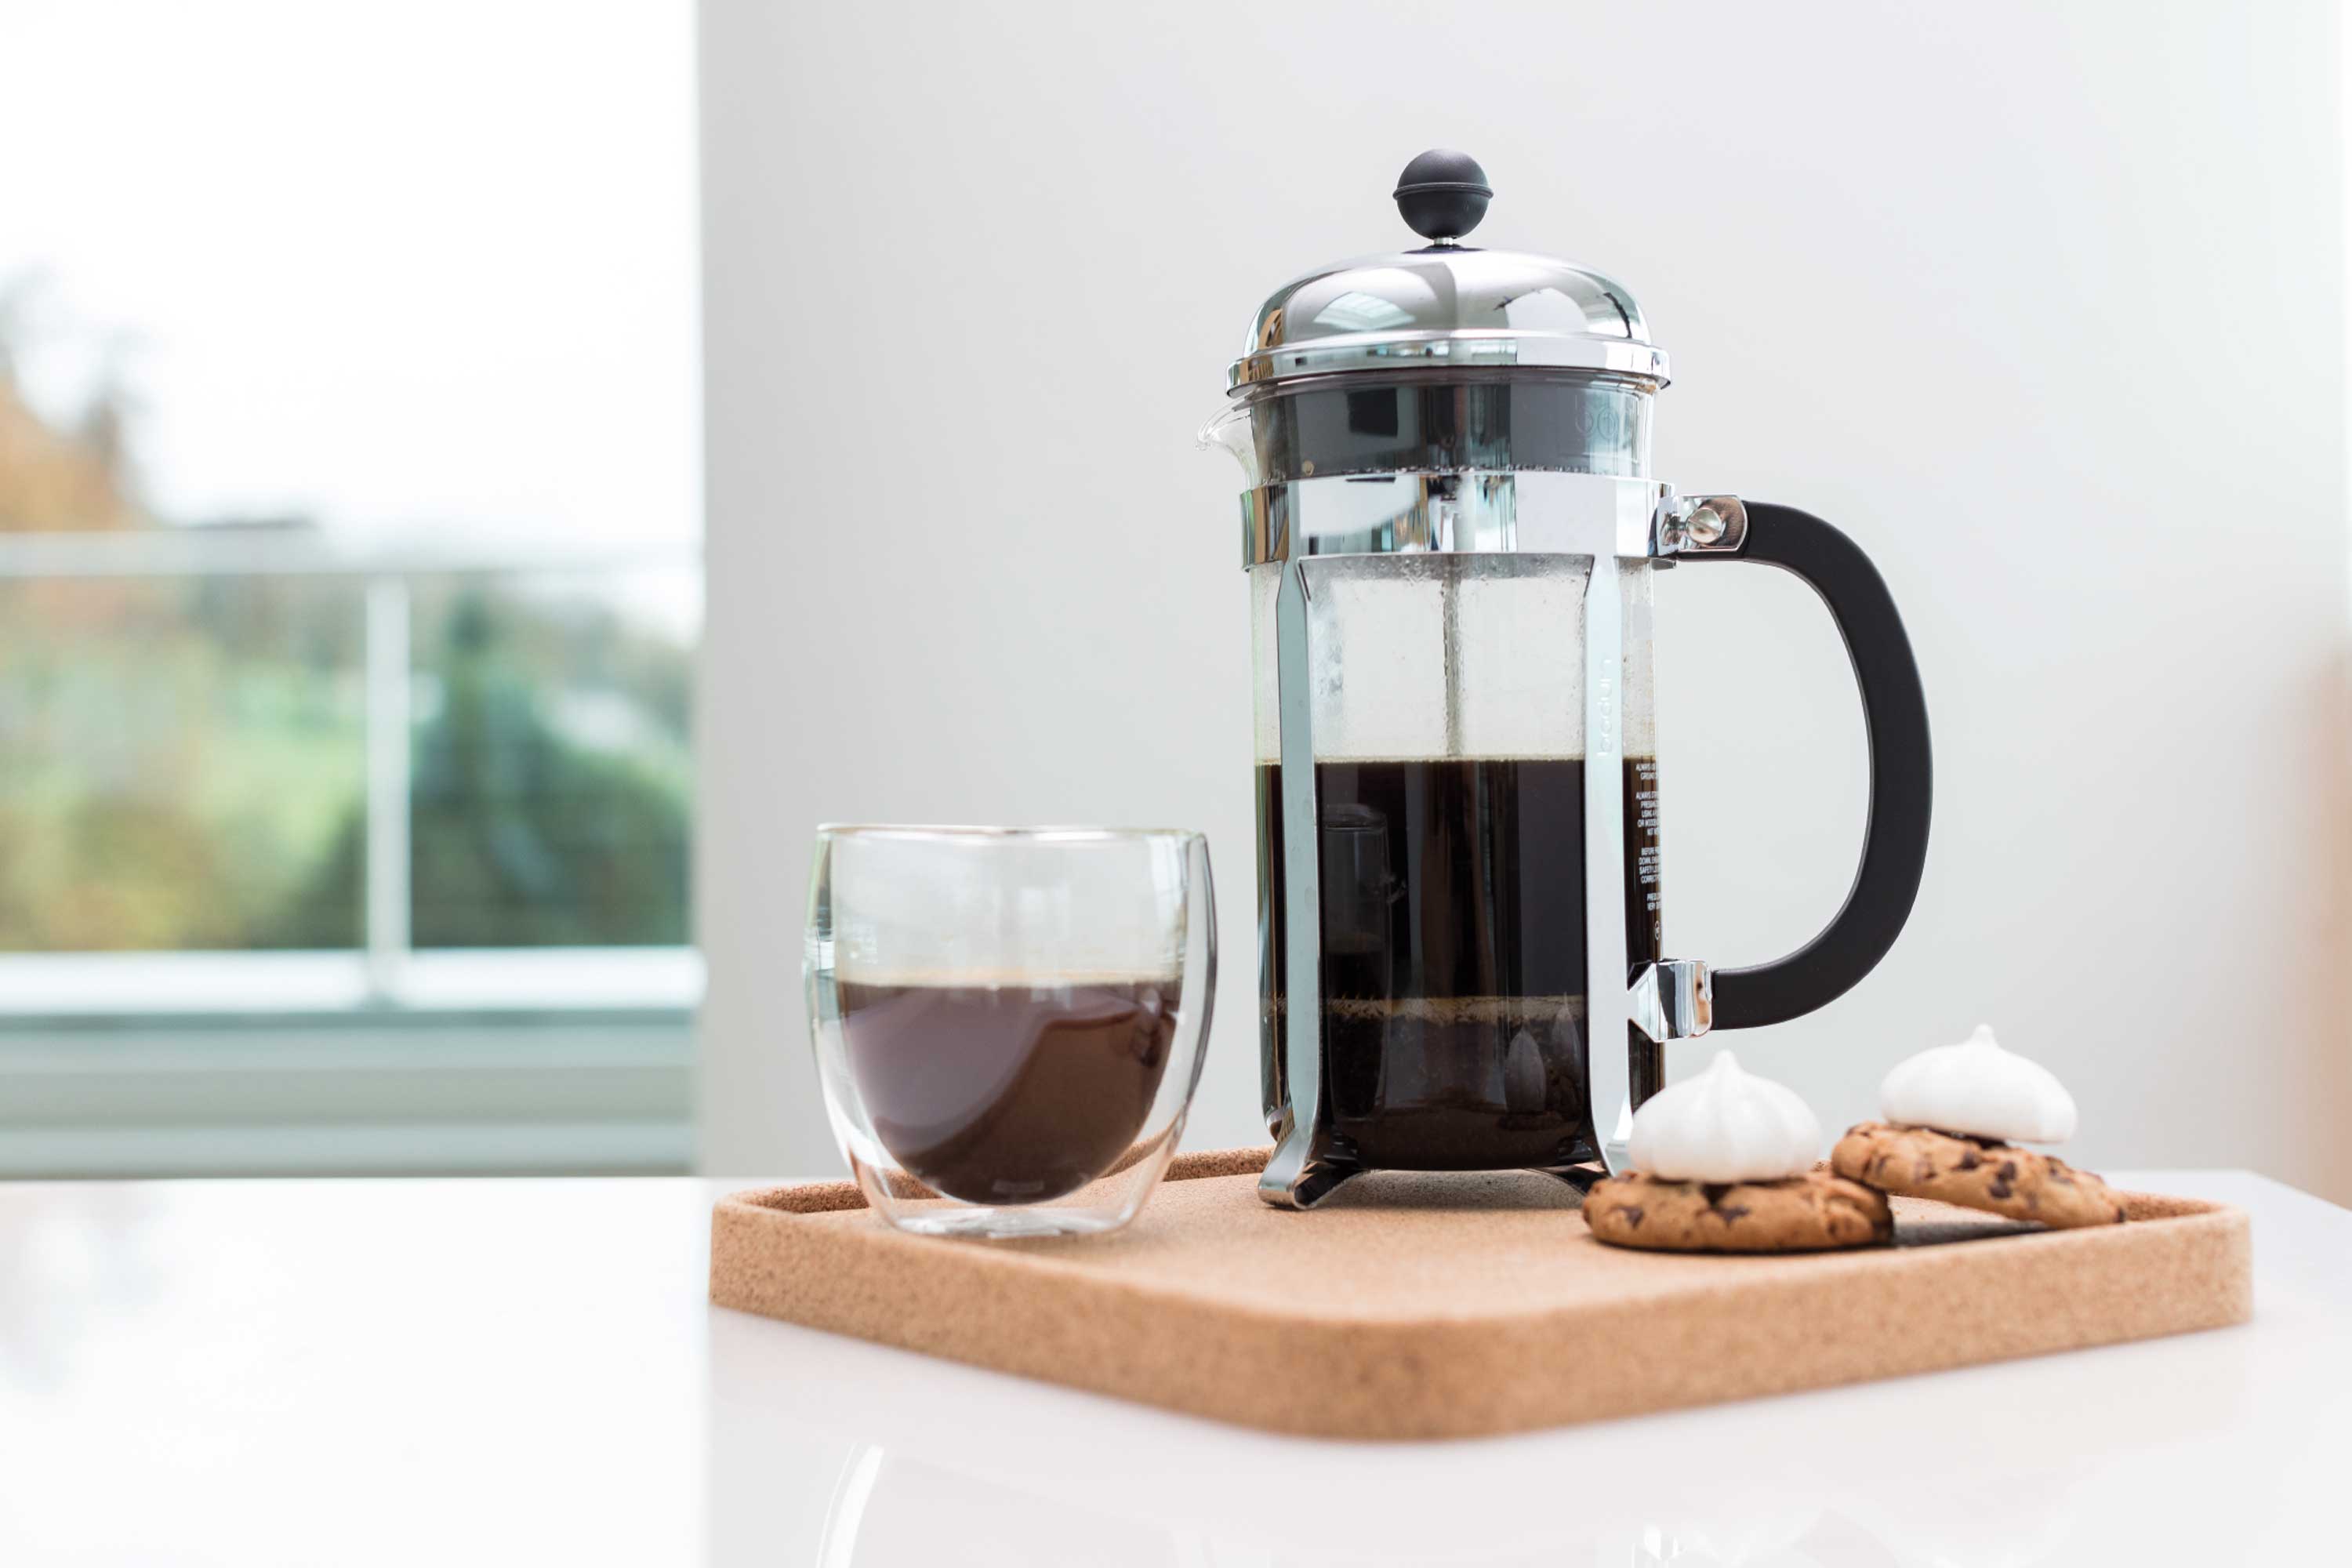 PAVINA Dubbelwandig Espressoglas, 8 cl, 6 stk @ RoyalDesign